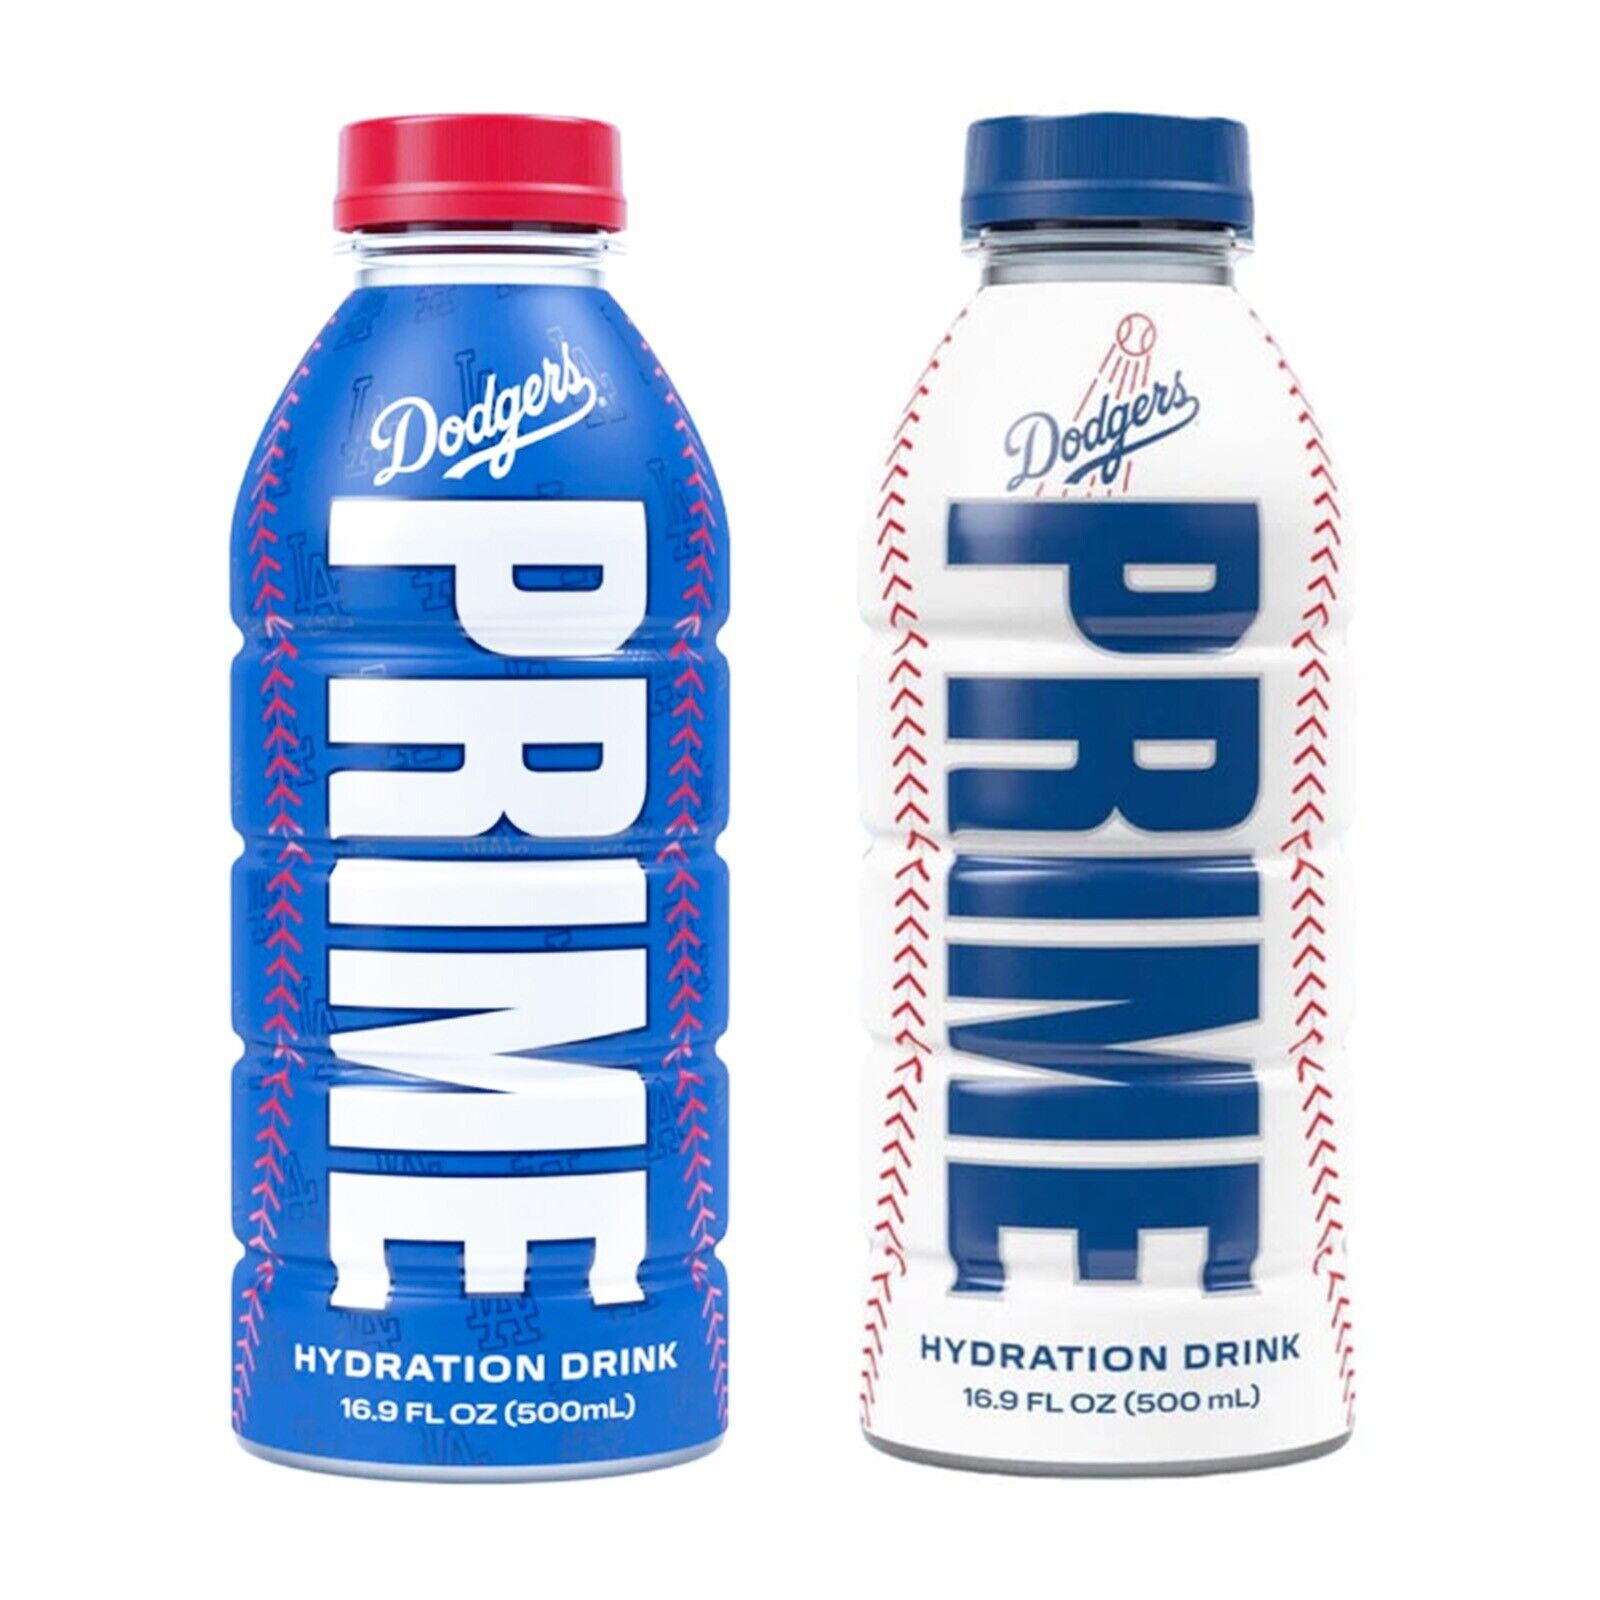 2 Rare Sealed Prime Hydration Drink Limited LA DODGERS WHITE & BLUE